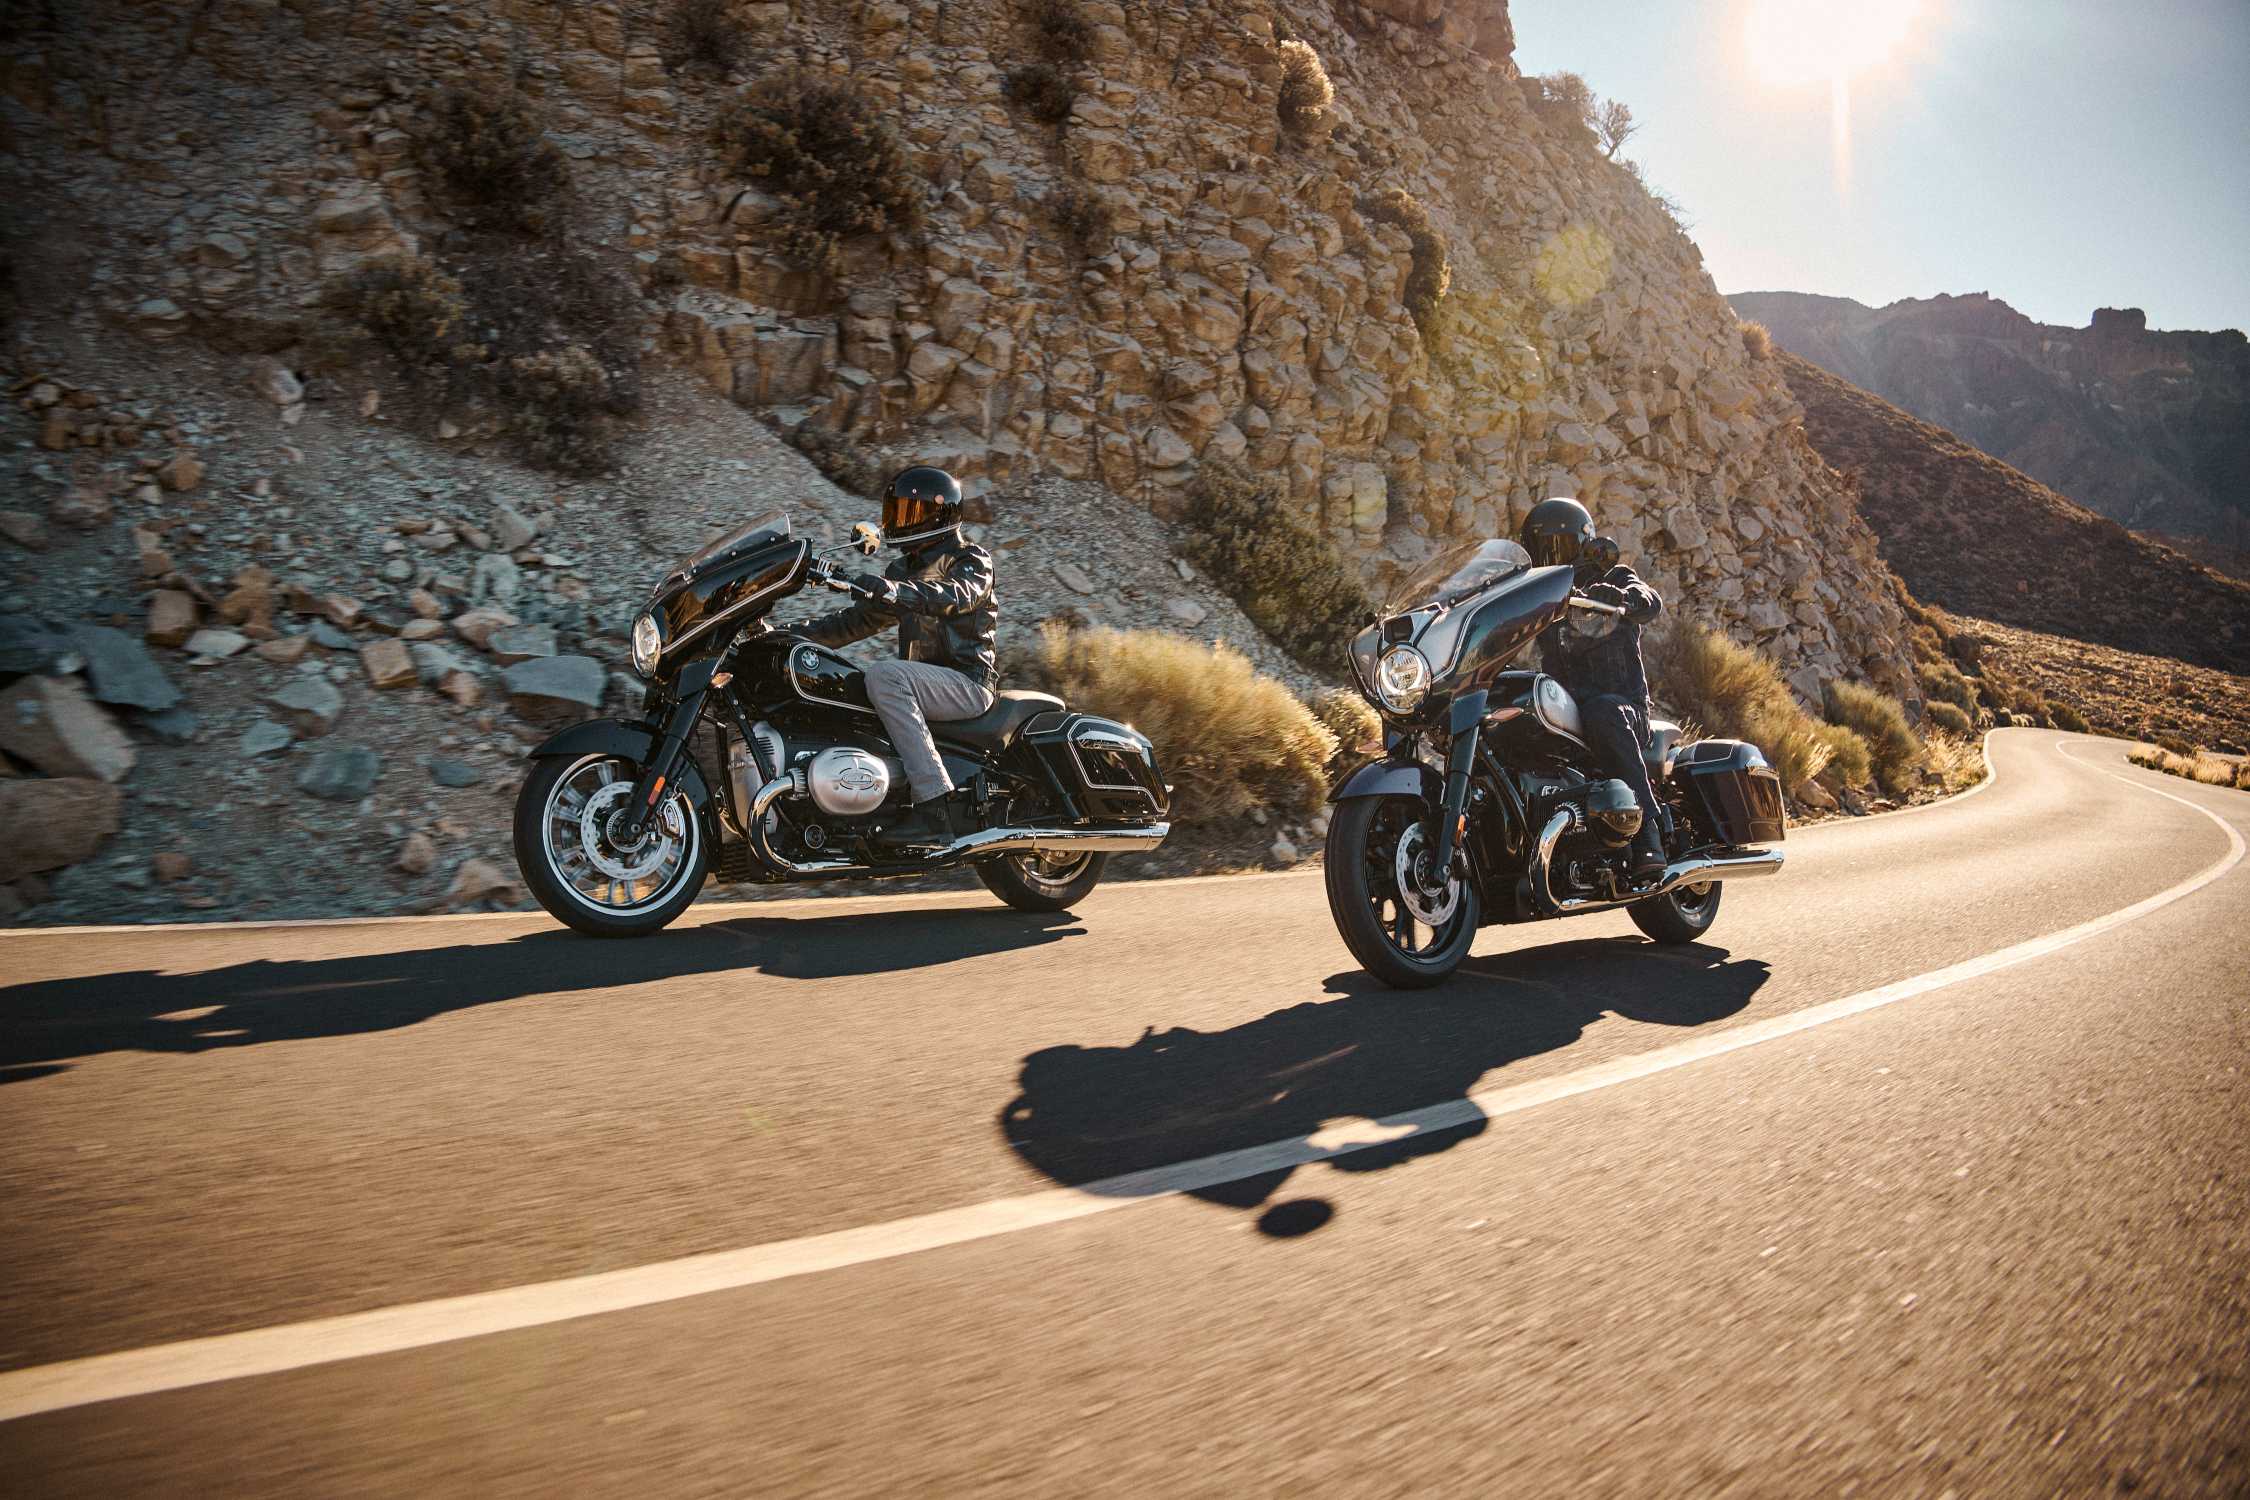 Incredible 66% increase in Q4 2022 BMW Motorcycle Sales • Total Motorcycle